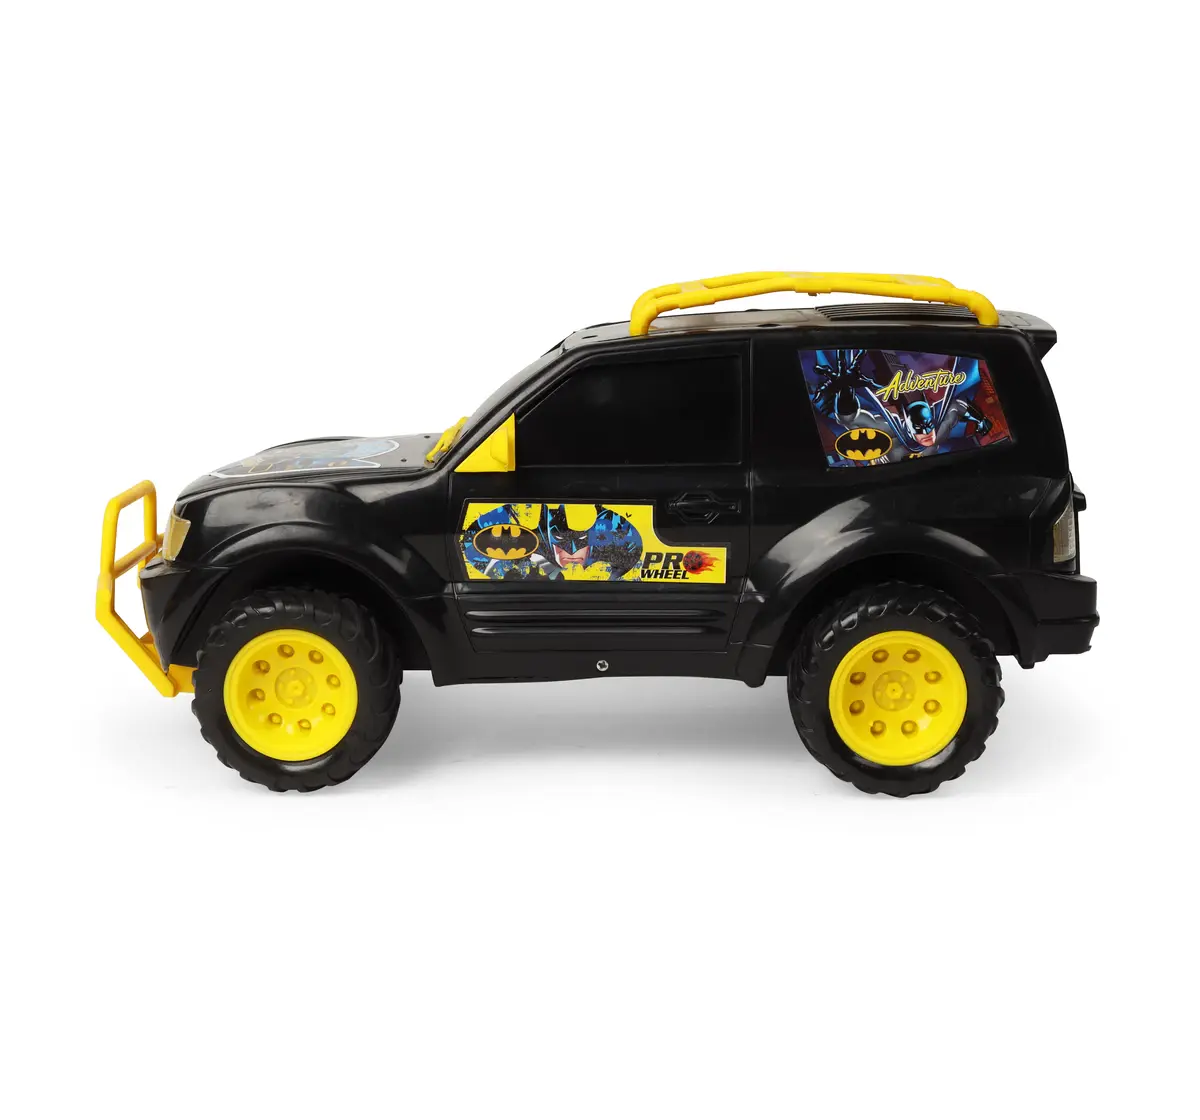 Toyzone 4 Wheel Drive Racer Car Ben10 71037 Black, 2Y+